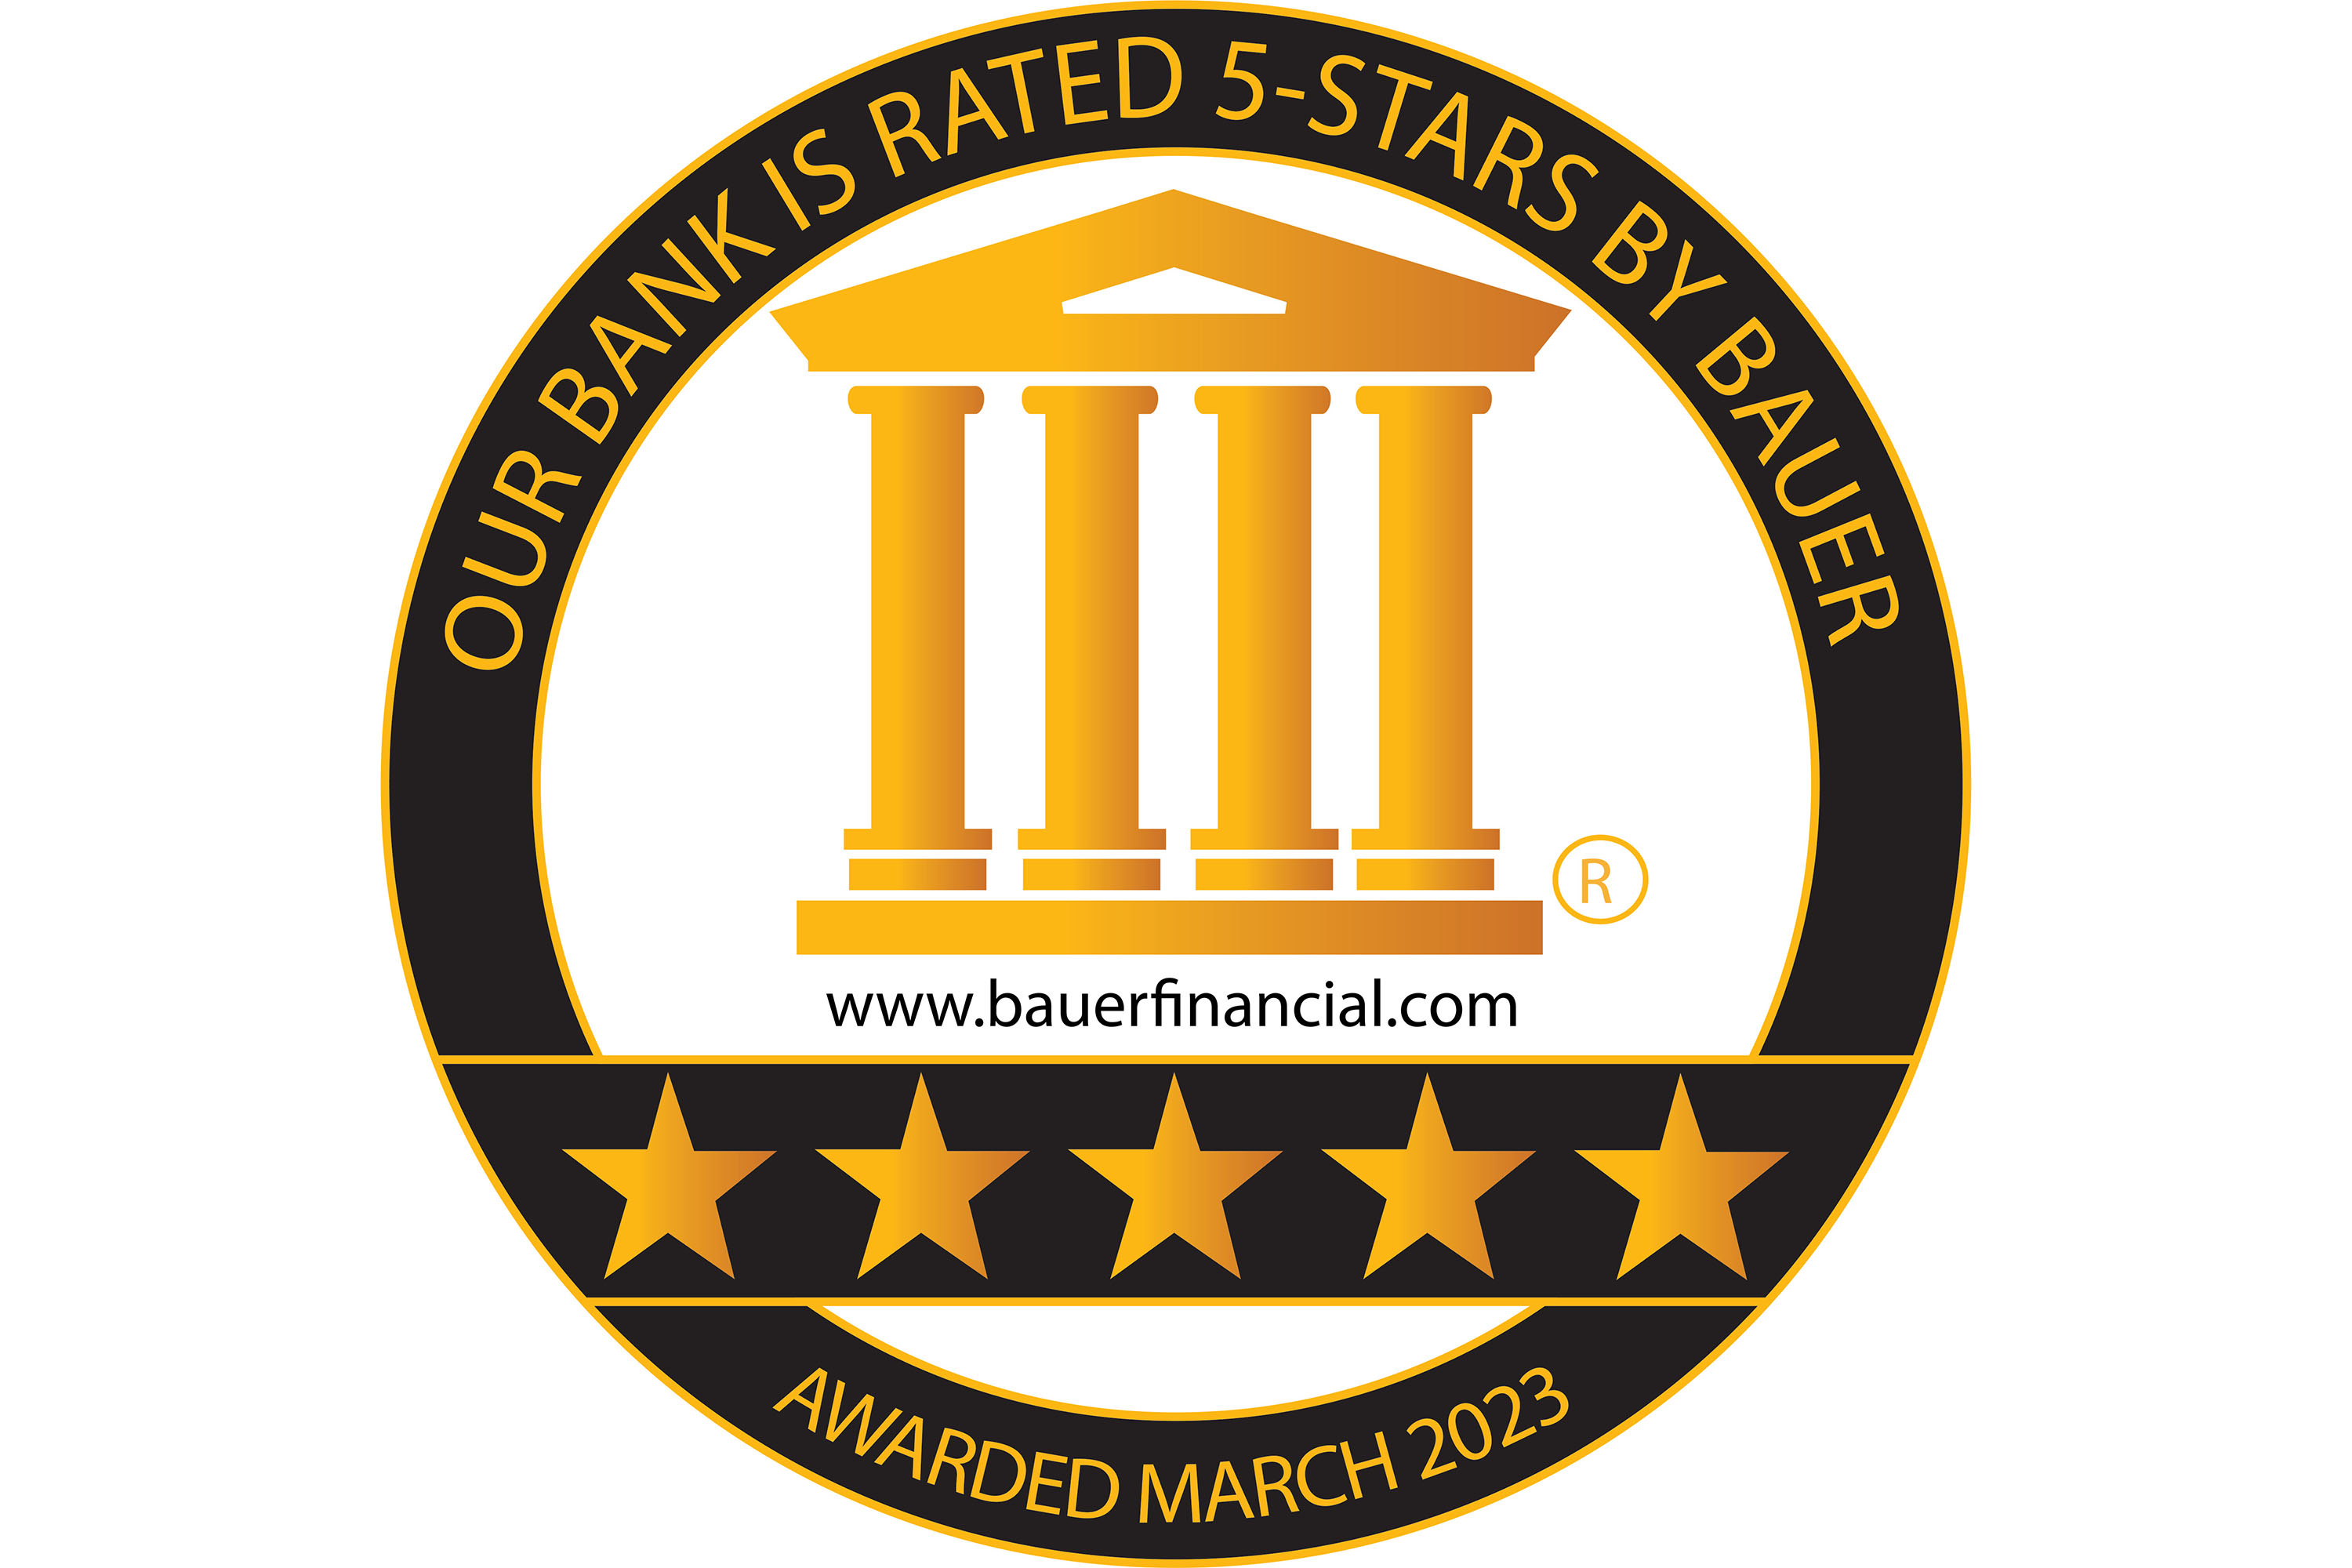 Bauer Financial Bank of Utah 5-Star Rating award